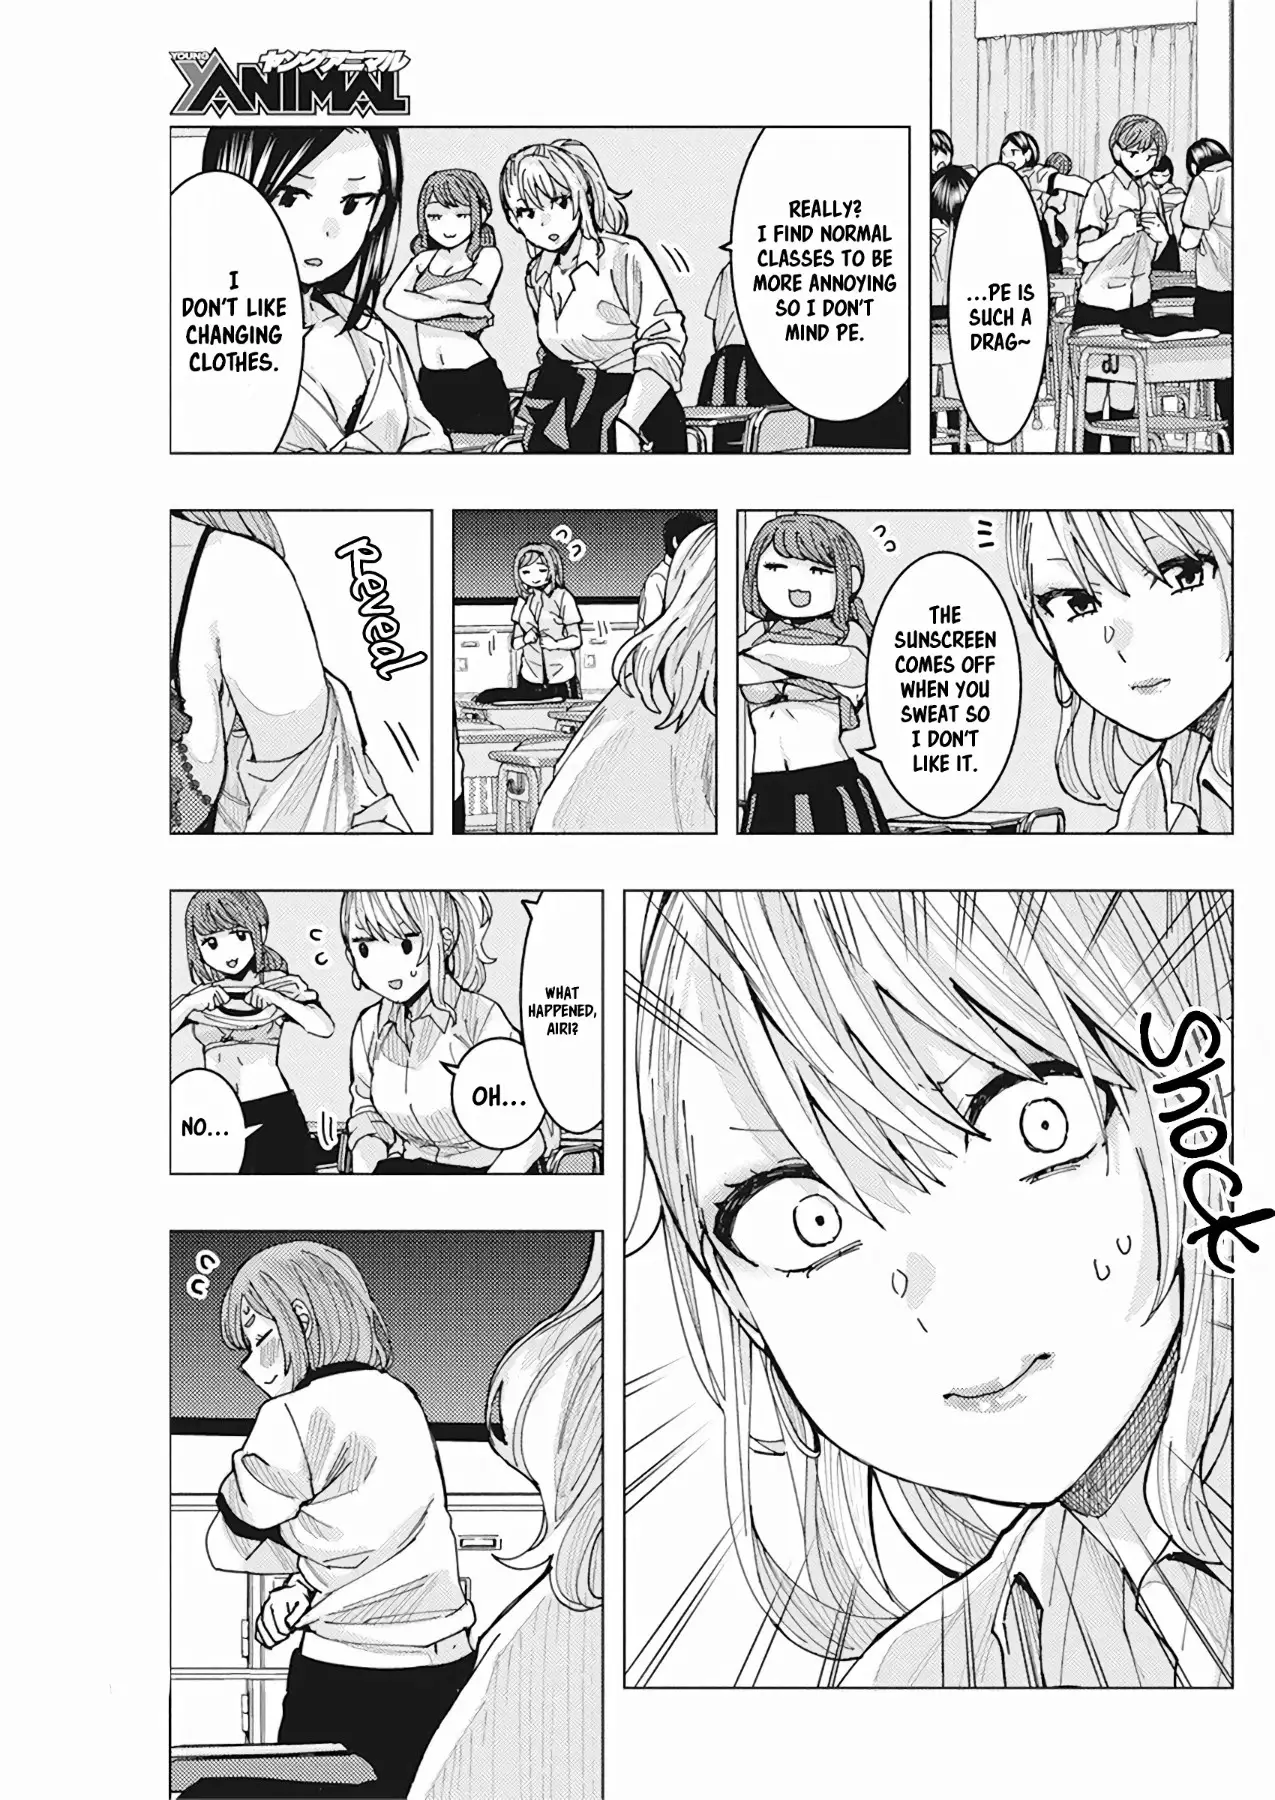 "nobukuni-San" Does She Like Me? - 8 page 10-4ab7e34e